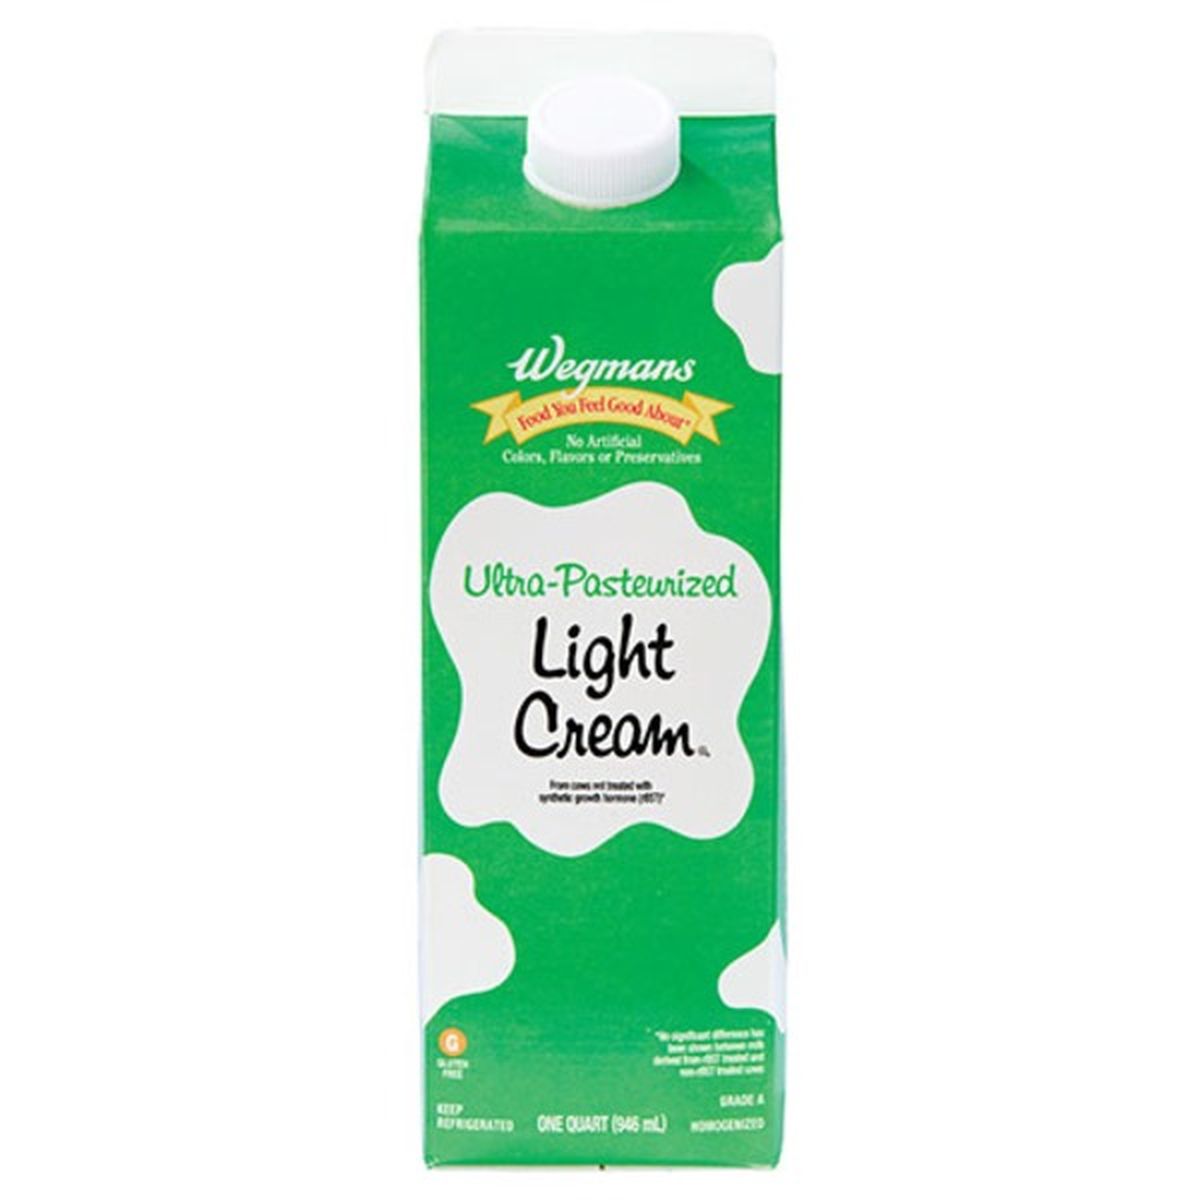 Calories in Wegmans Light Cream